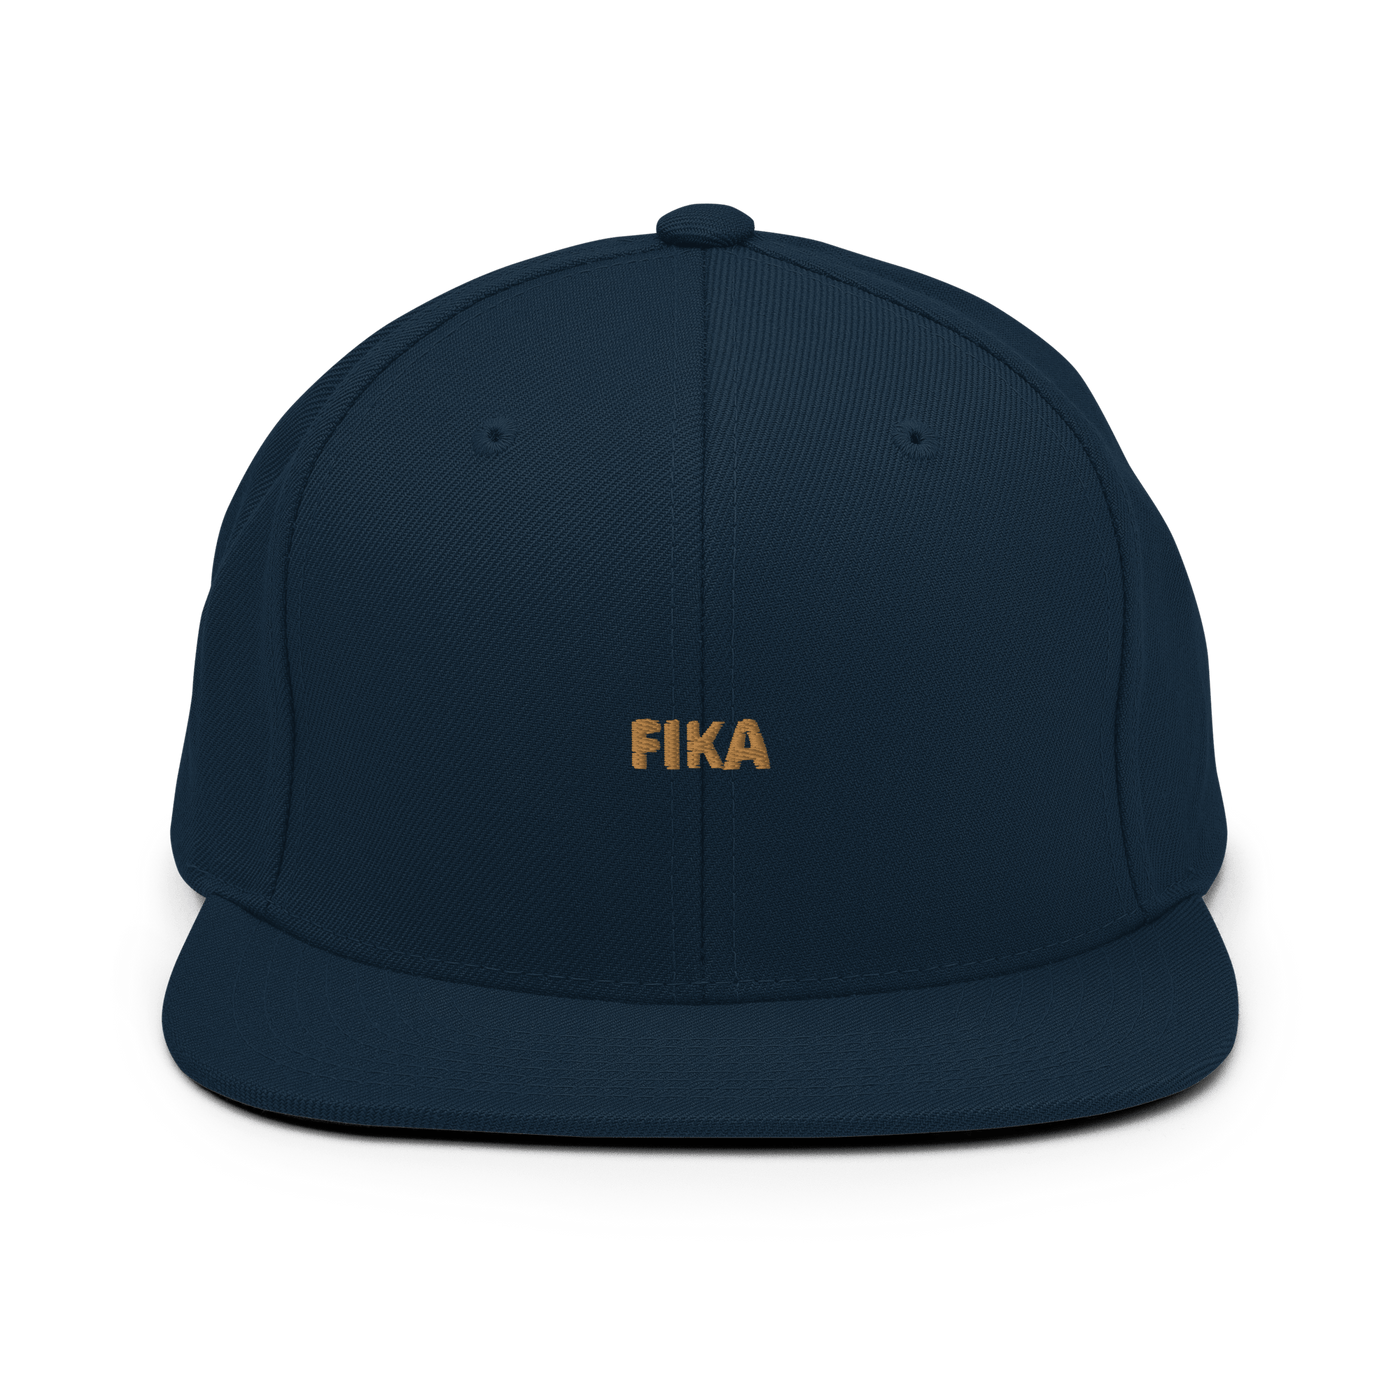 FIKA Snapback - Black - - Just Another Cap Store